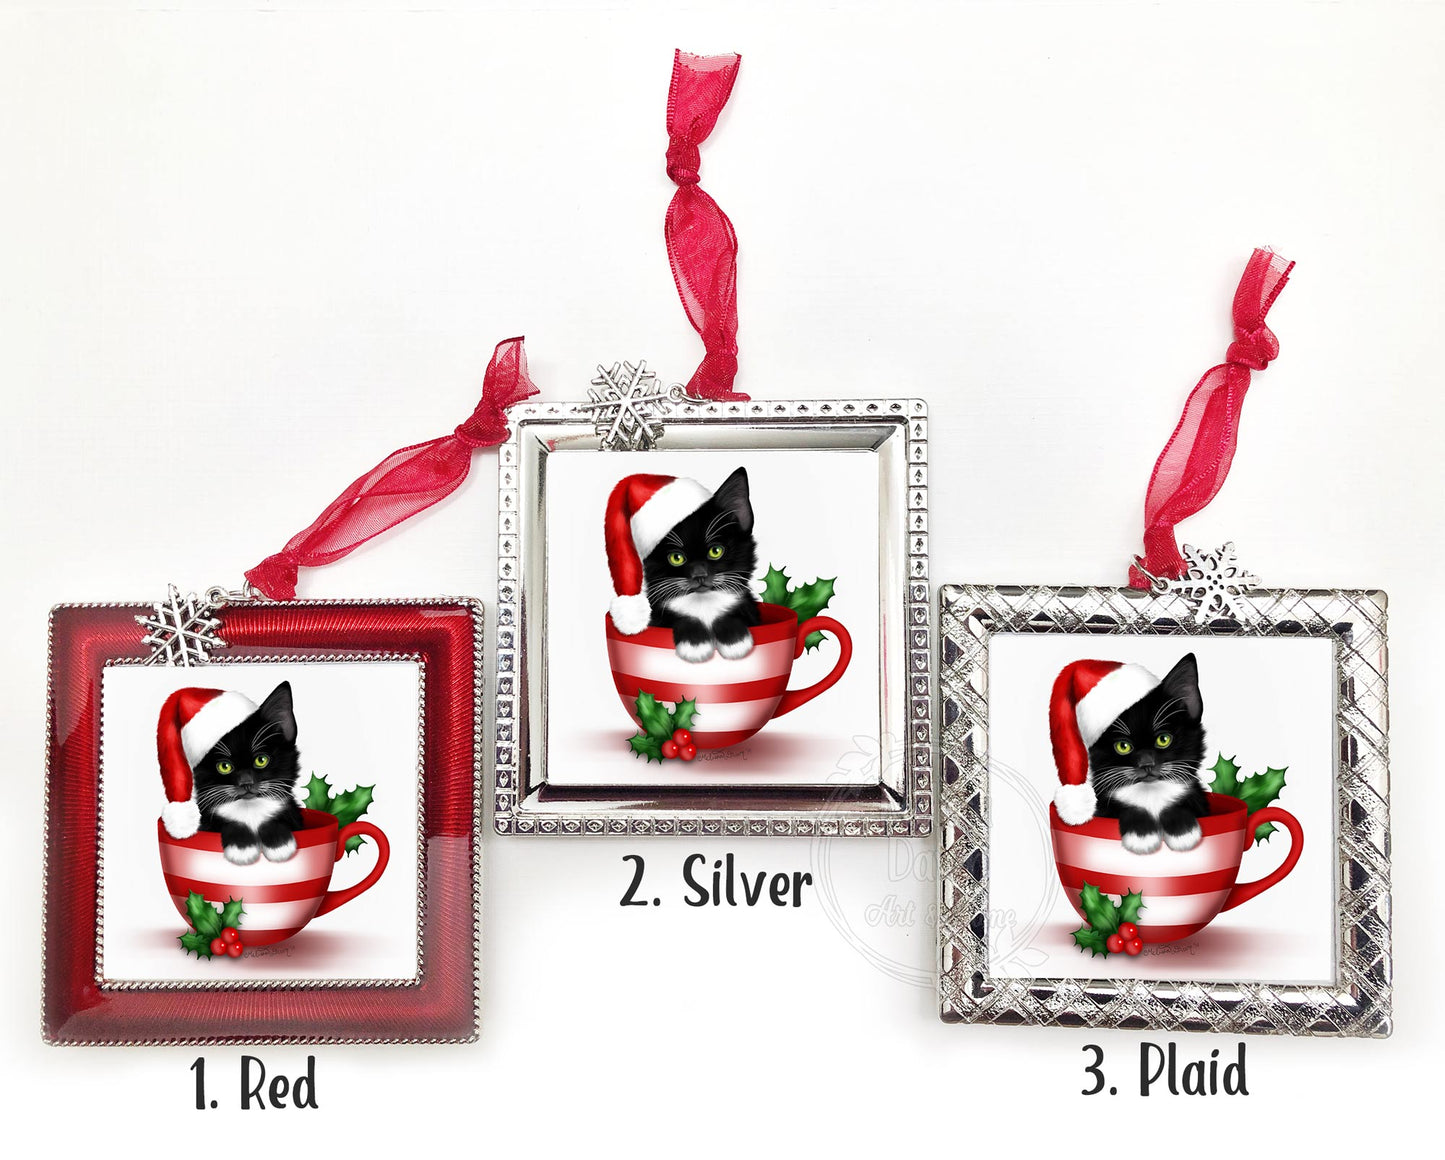 Tuxedo Cat Ornament / Tuxedo Cat Christmas Ornament / Black and White Cat / Custom Cat Ornament / Cat Ornament / Cat Lovers Gift / Santa Cat Ornament / Tuxedo Ornament